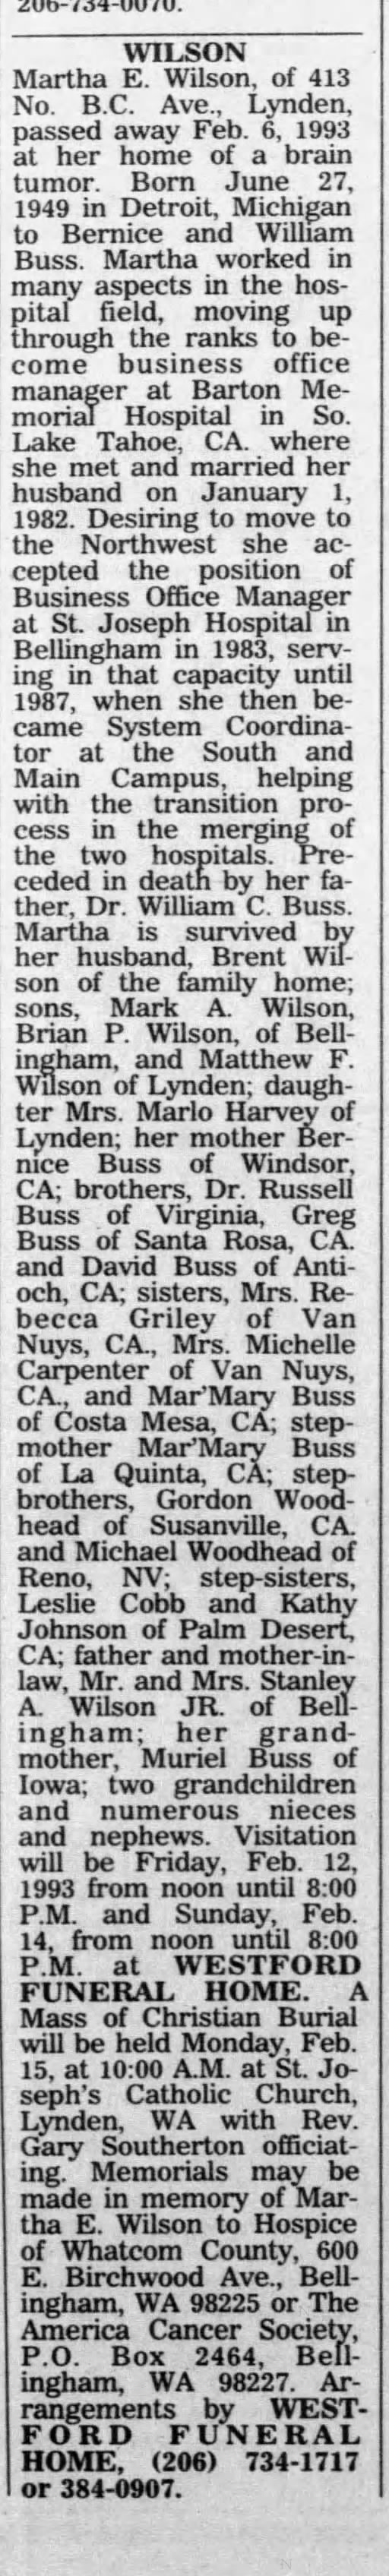 Obituary for Martha EL WILSON, 1949-1993